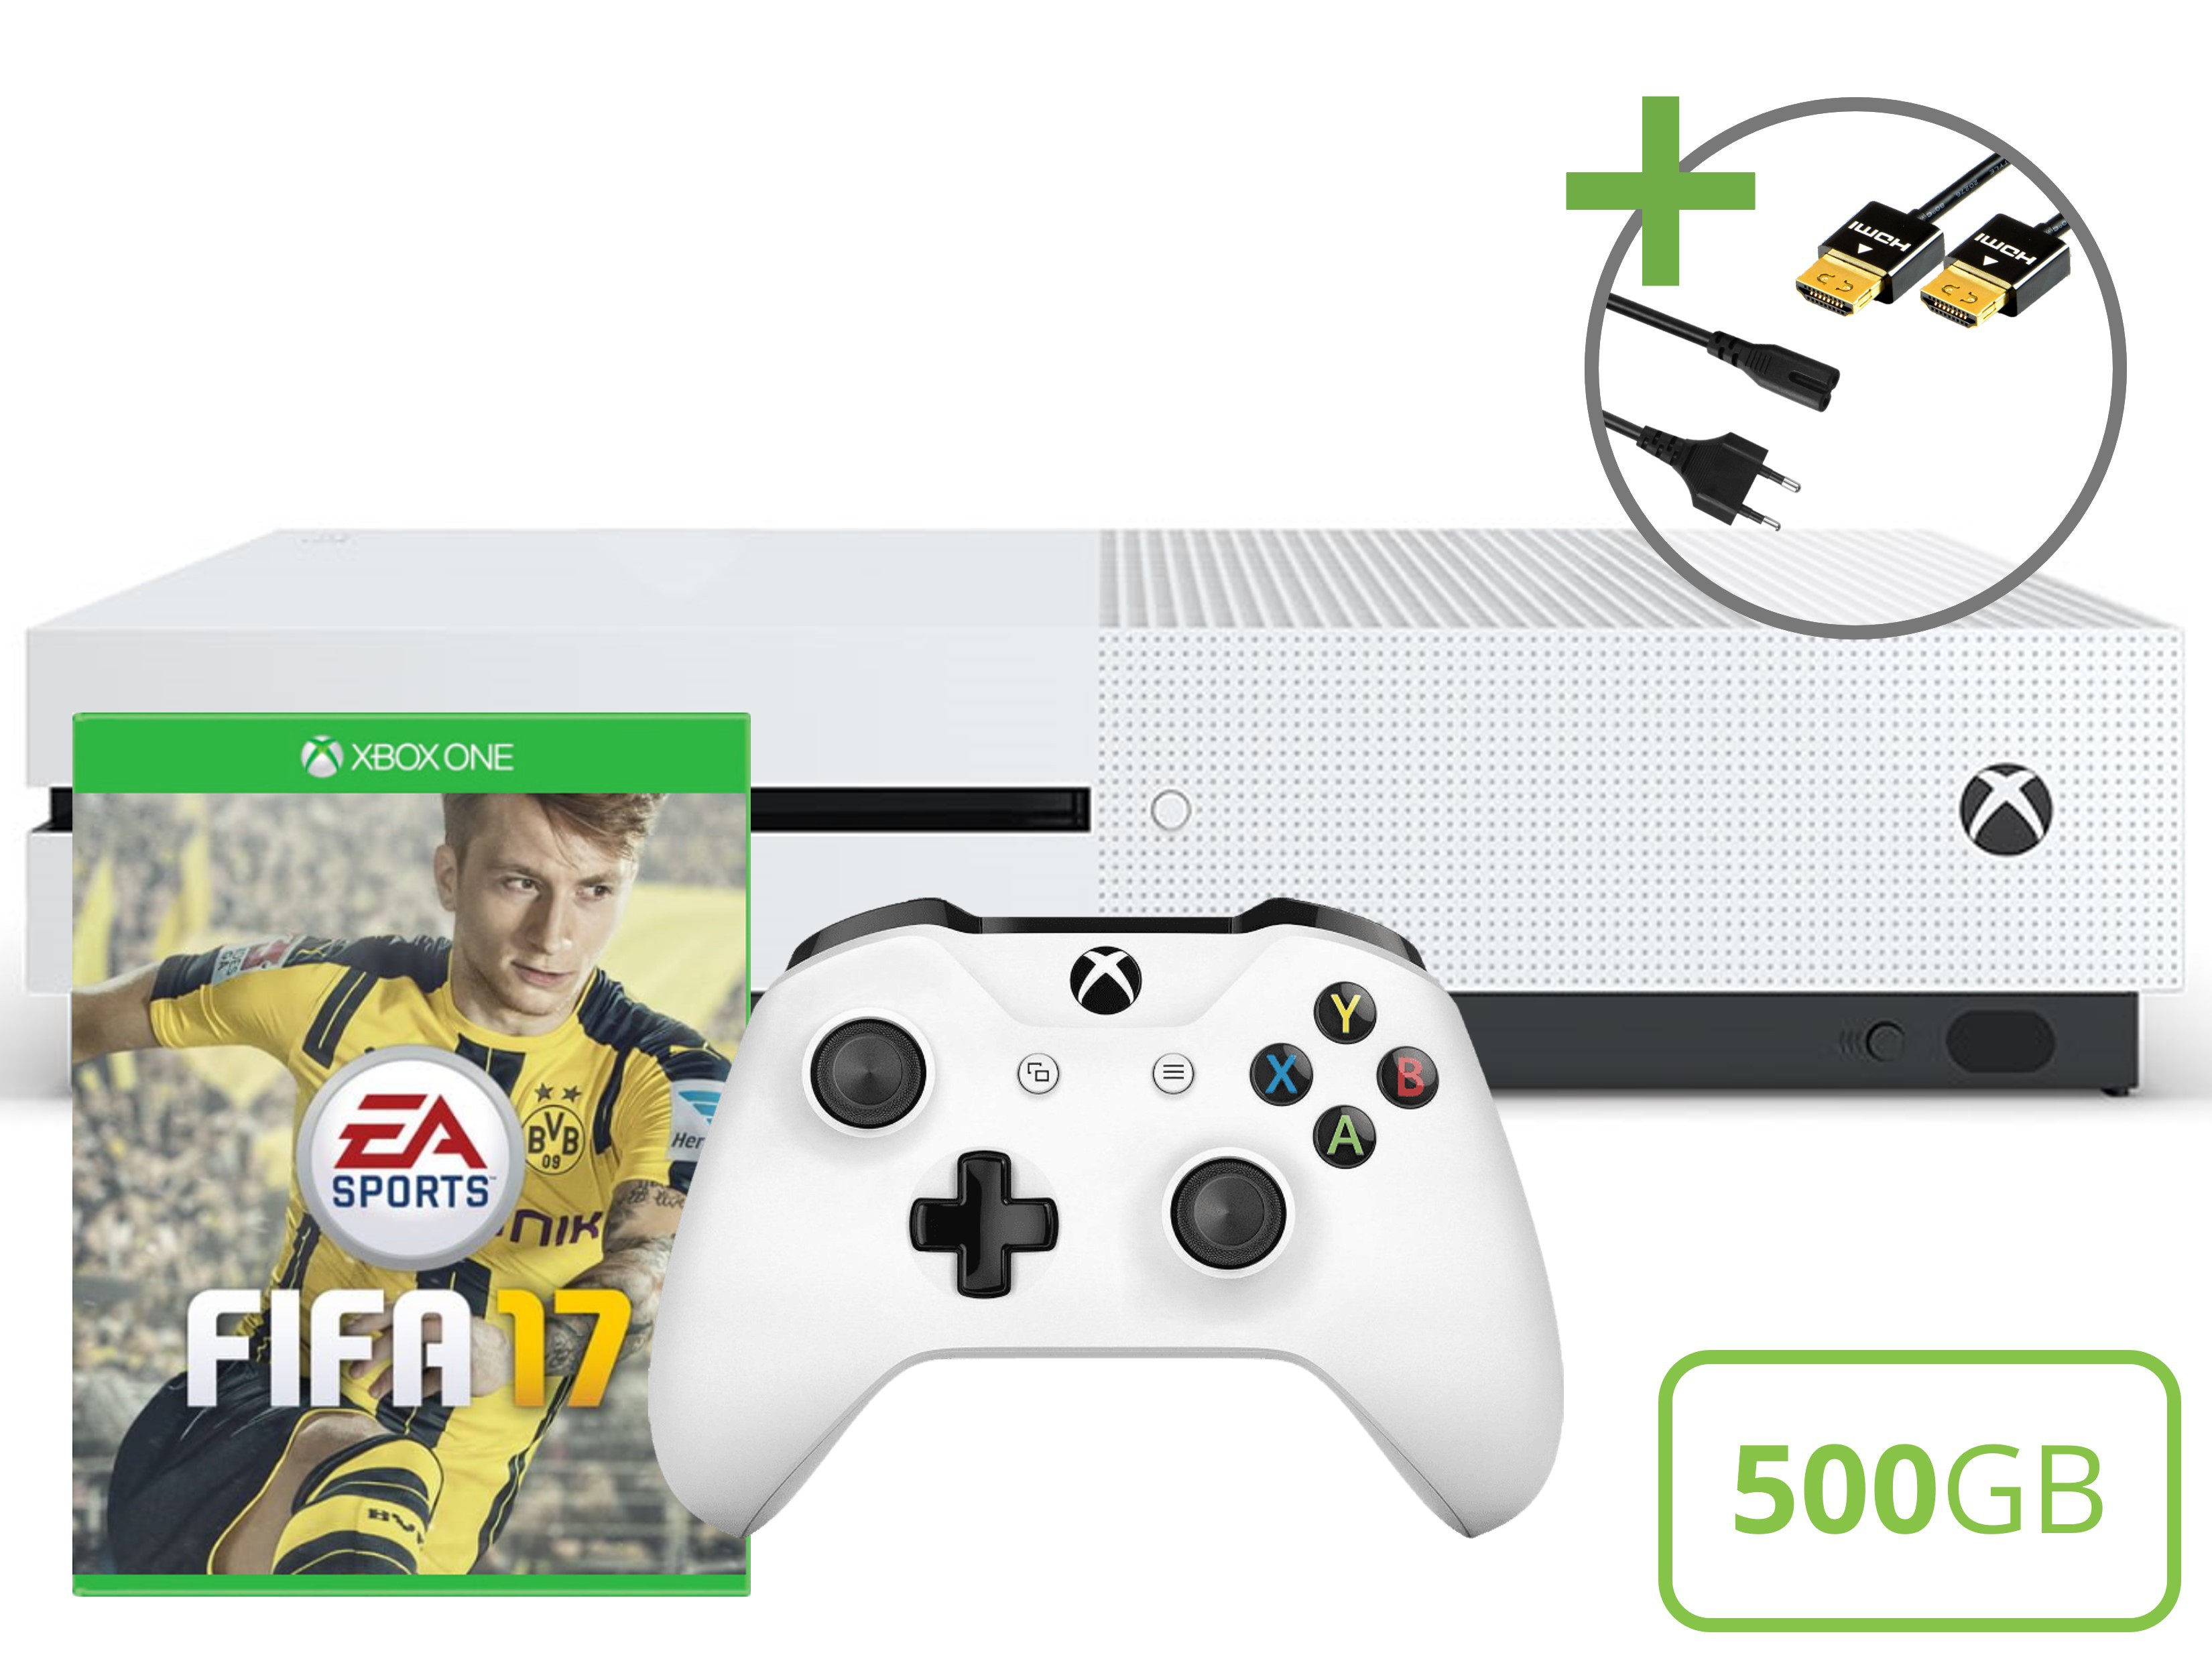 Microsoft Xbox One S Starter Pack - 500GB FIFA 17 Edition Kopen | Xbox One Hardware